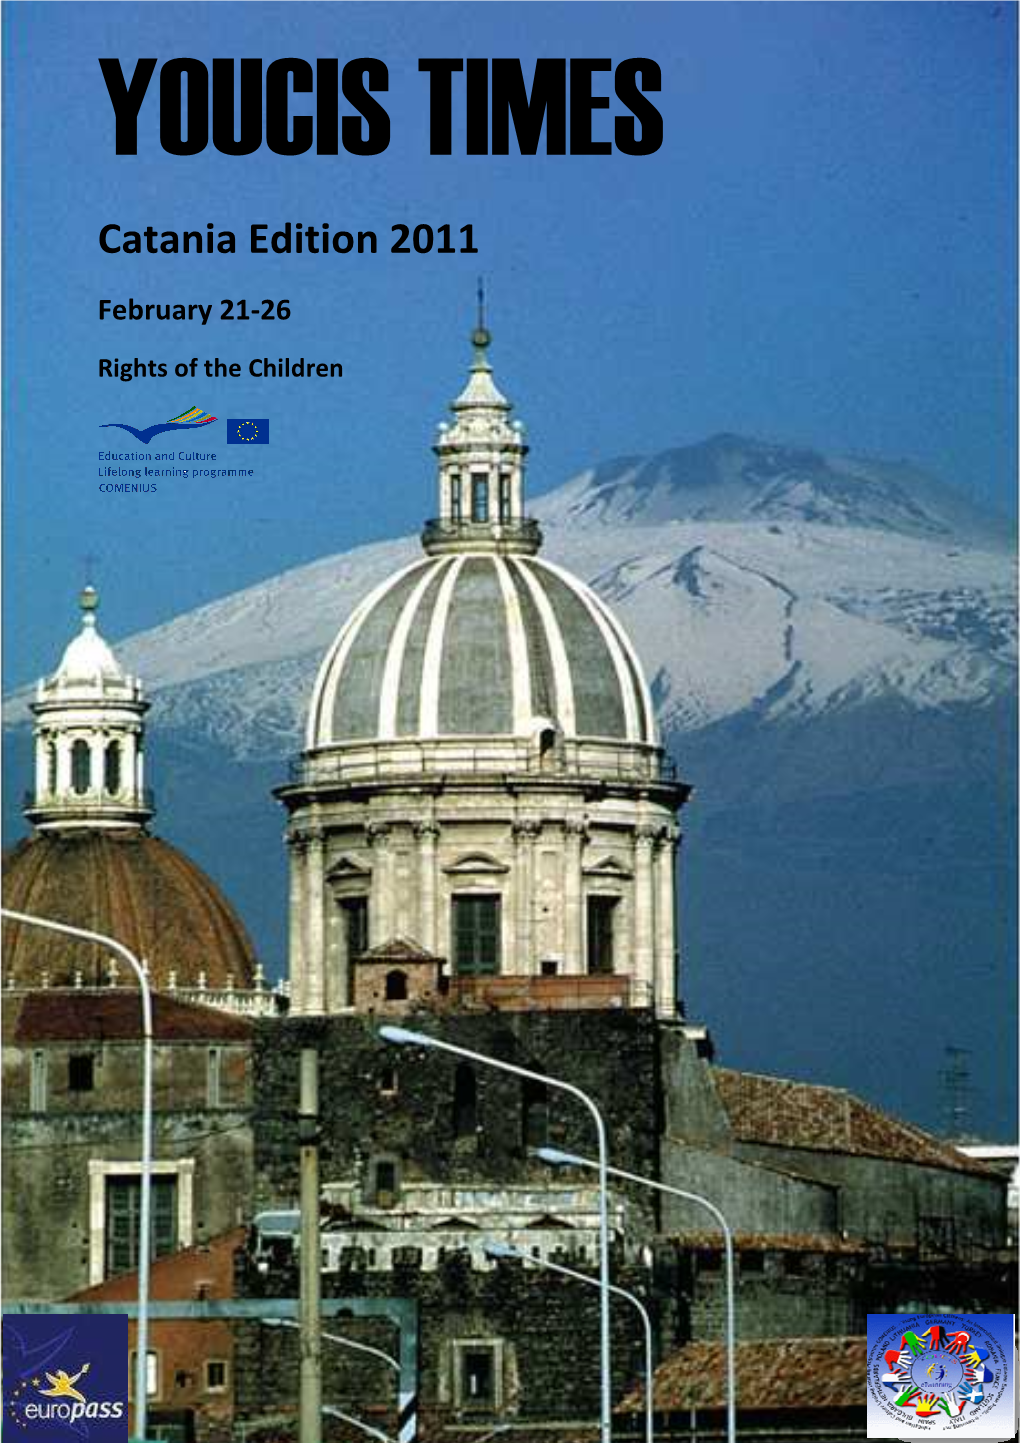 Catania Edition 2011